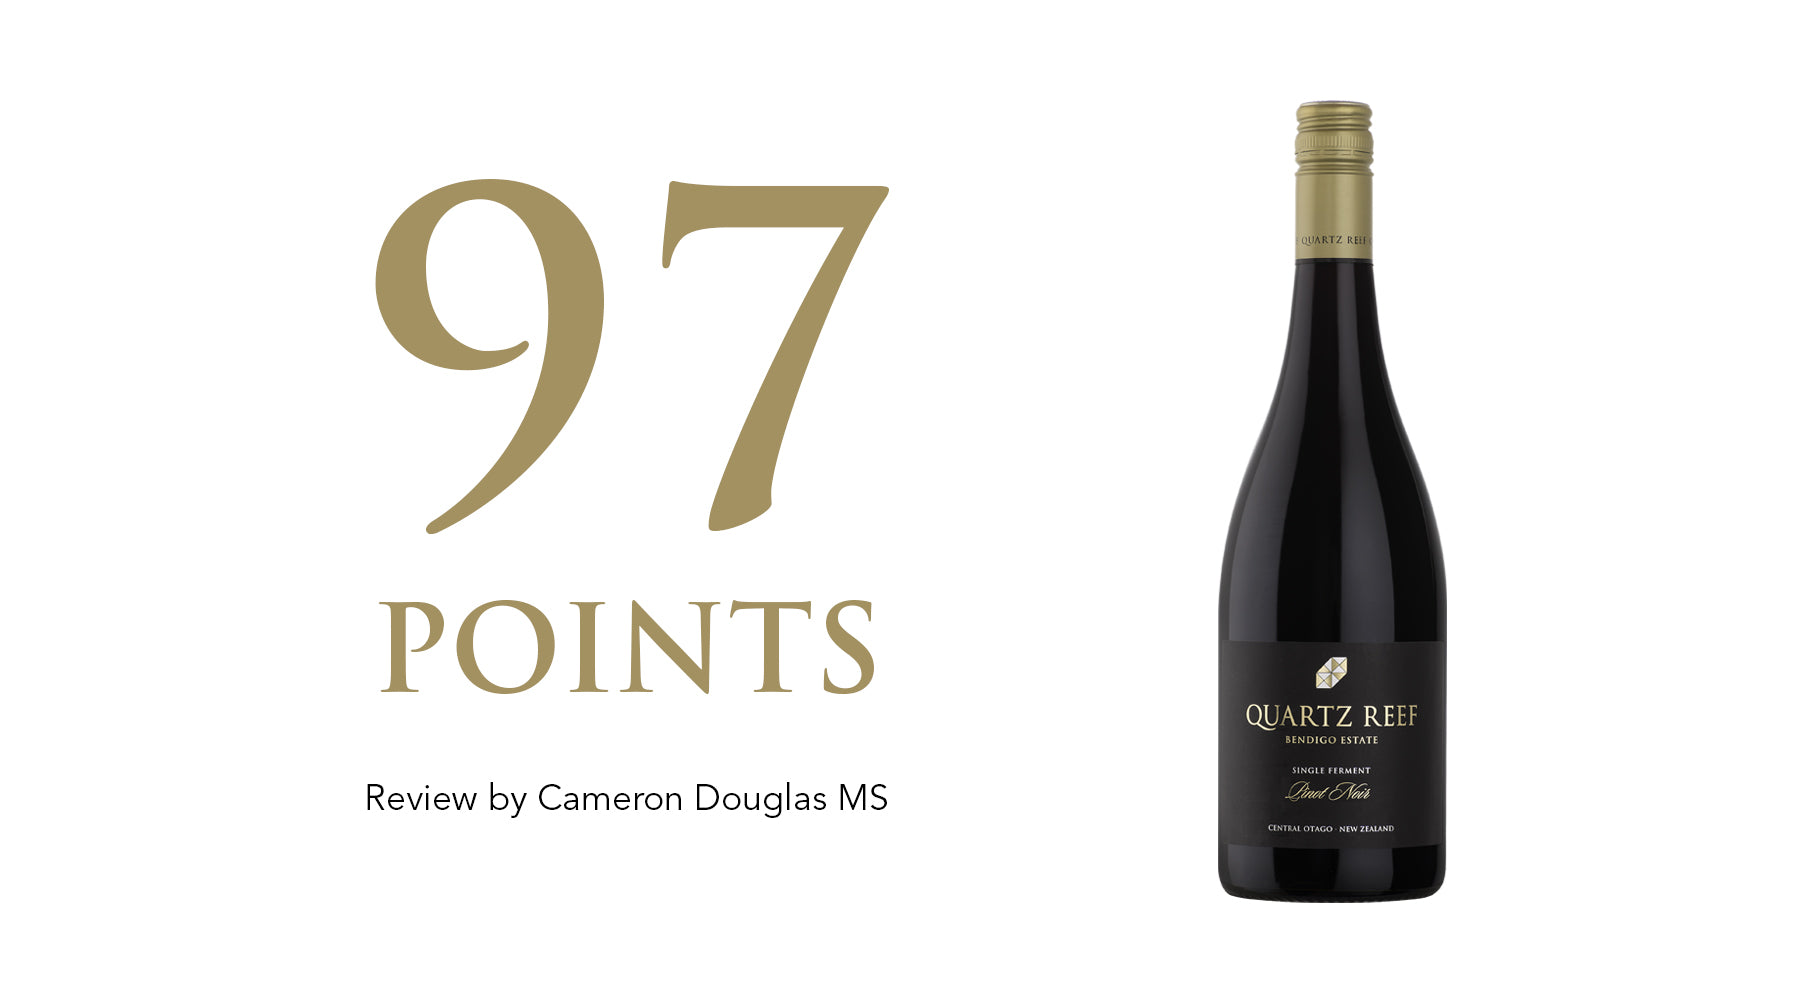 Single Ferment Pinot Noir 2017 - Awarded 97 Points